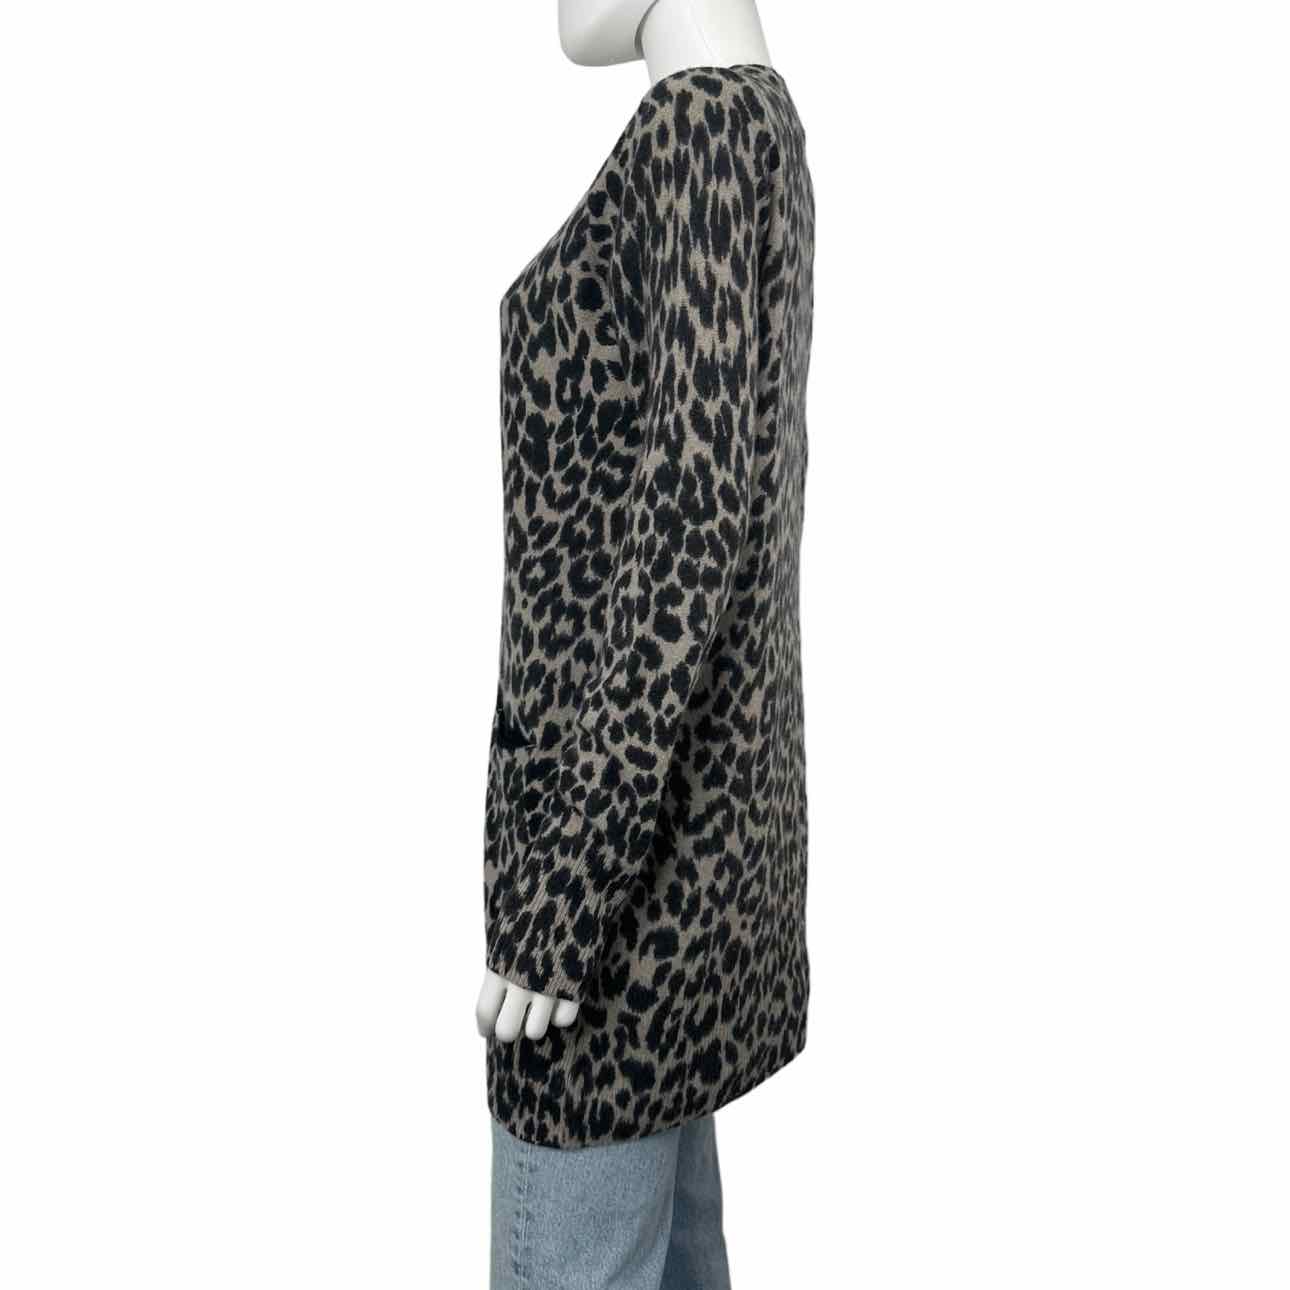 Leopard print cashmere sweater cardigan ￼